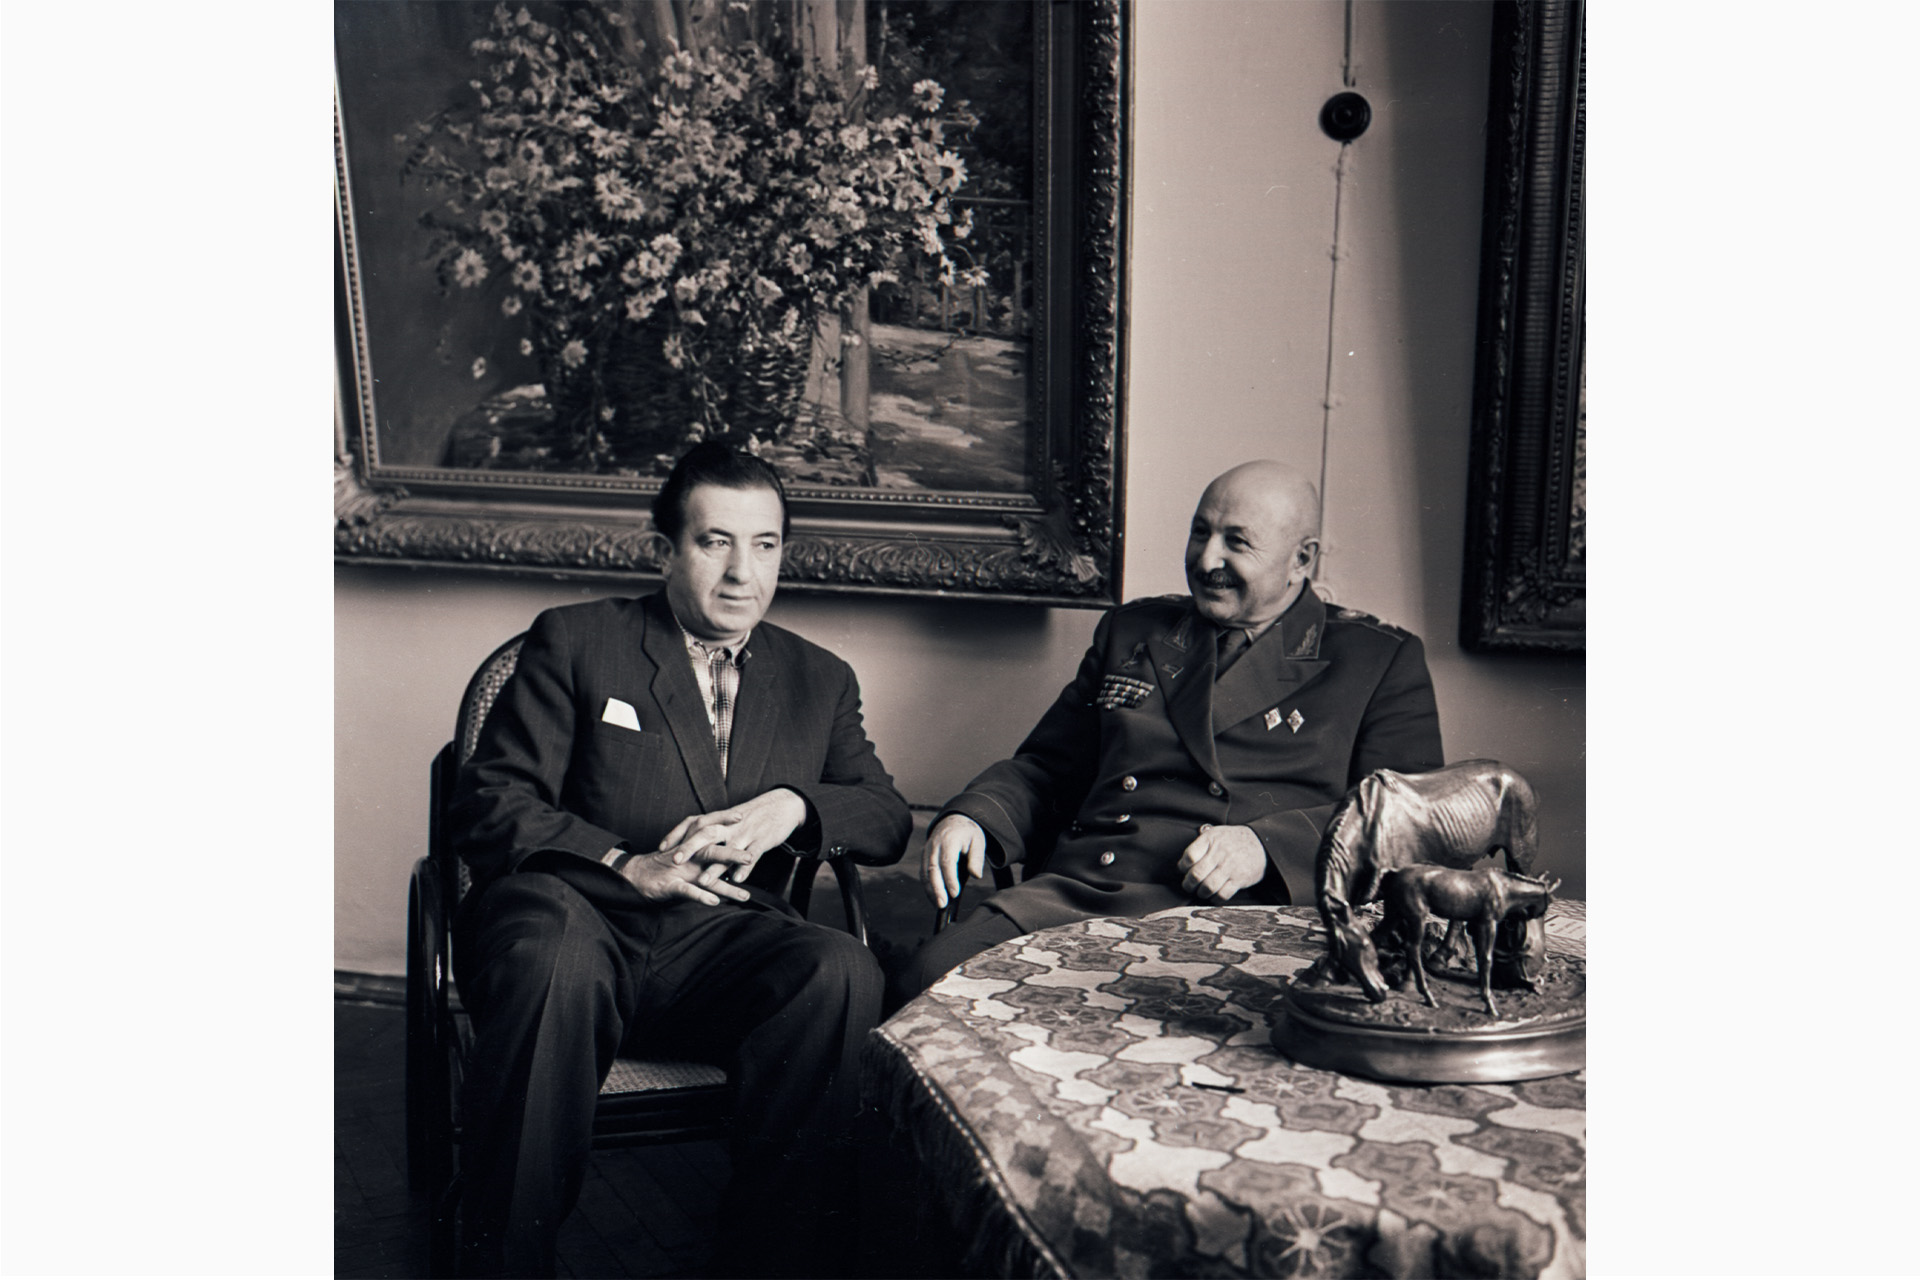 Дмитрий Налбандян и Иван Баграмян в мастерской художника,
1960-е